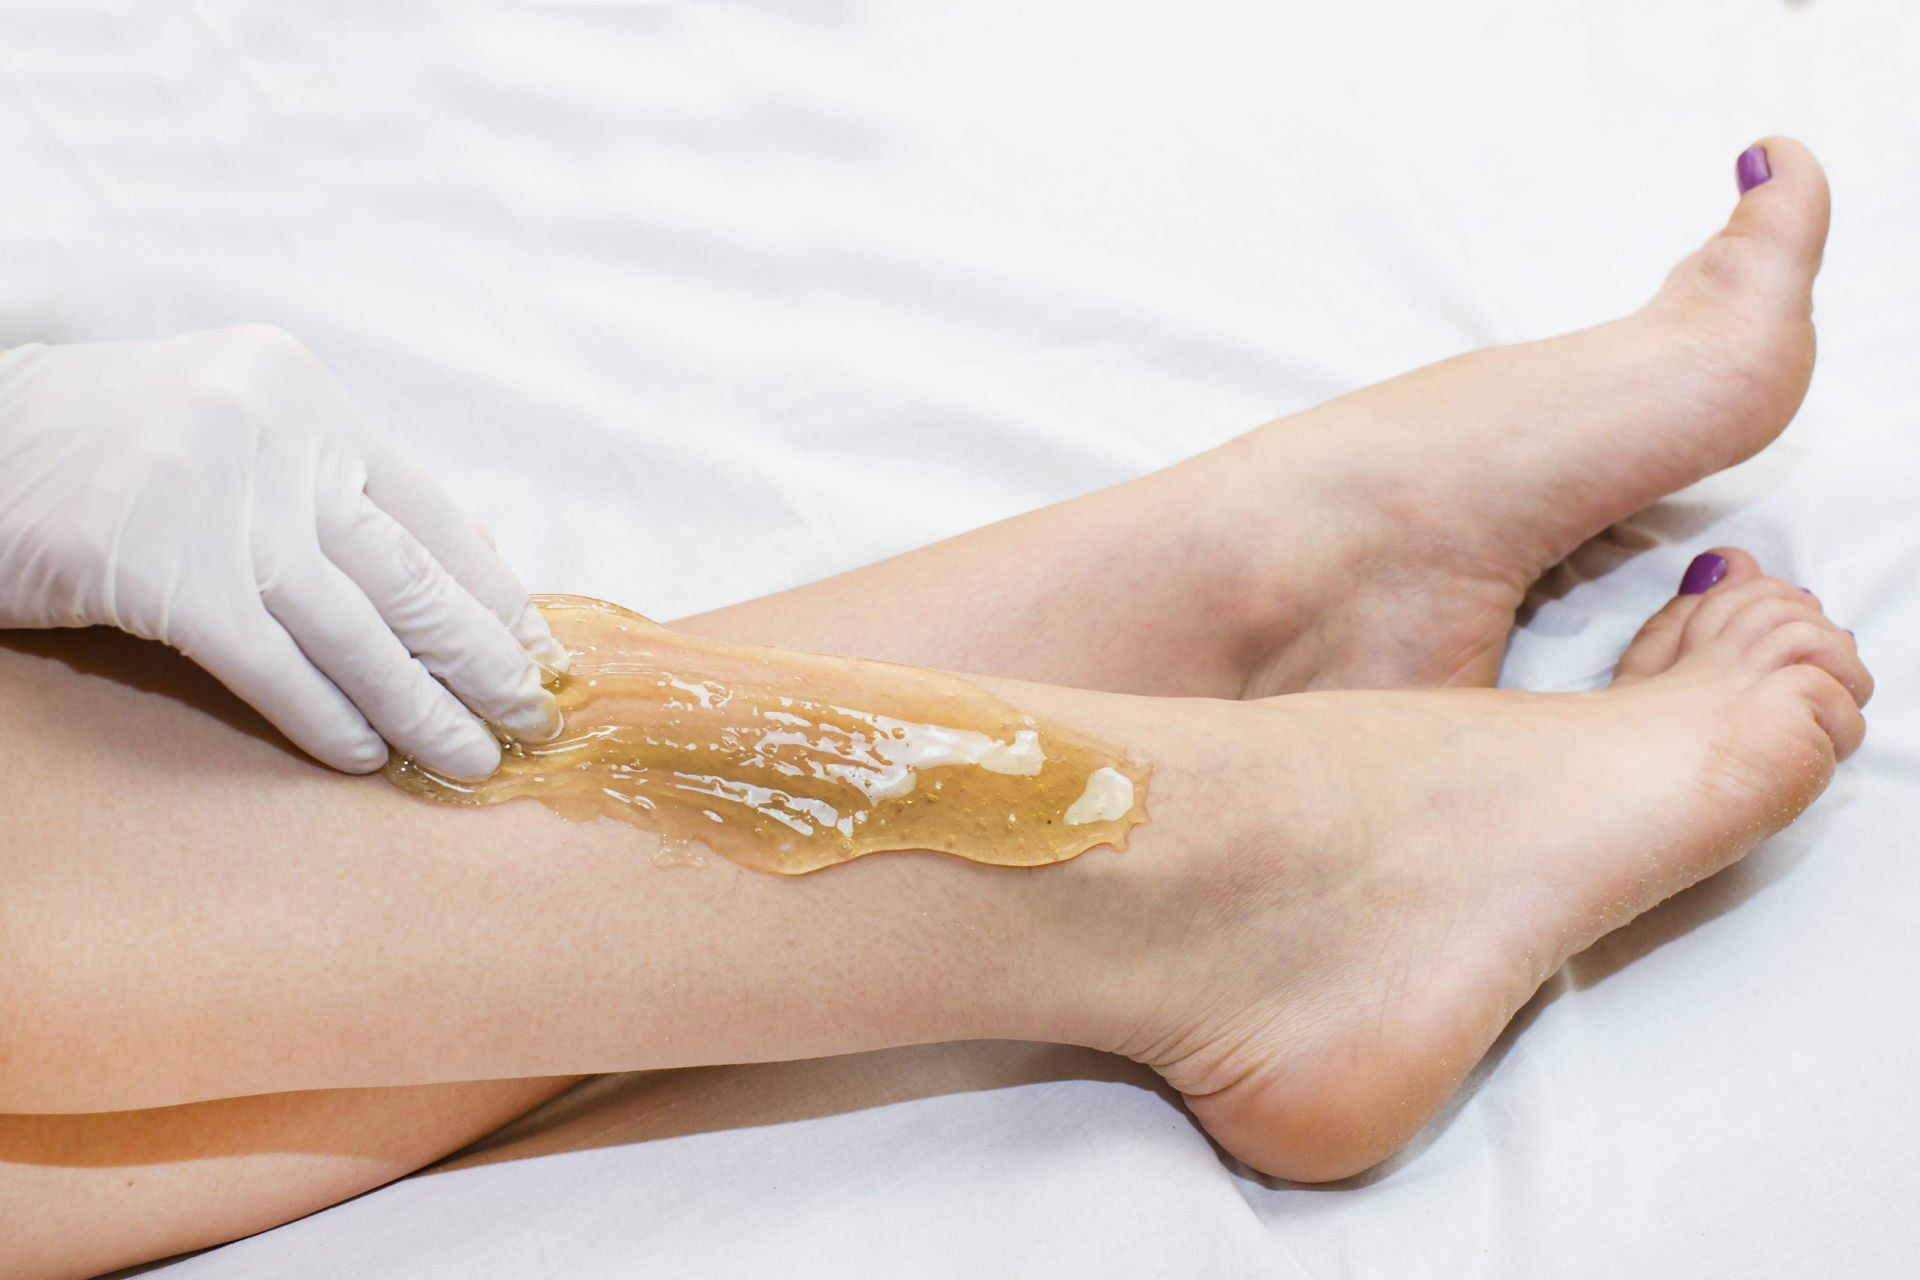 A woman is getting her legs waxed in a beauty salon.